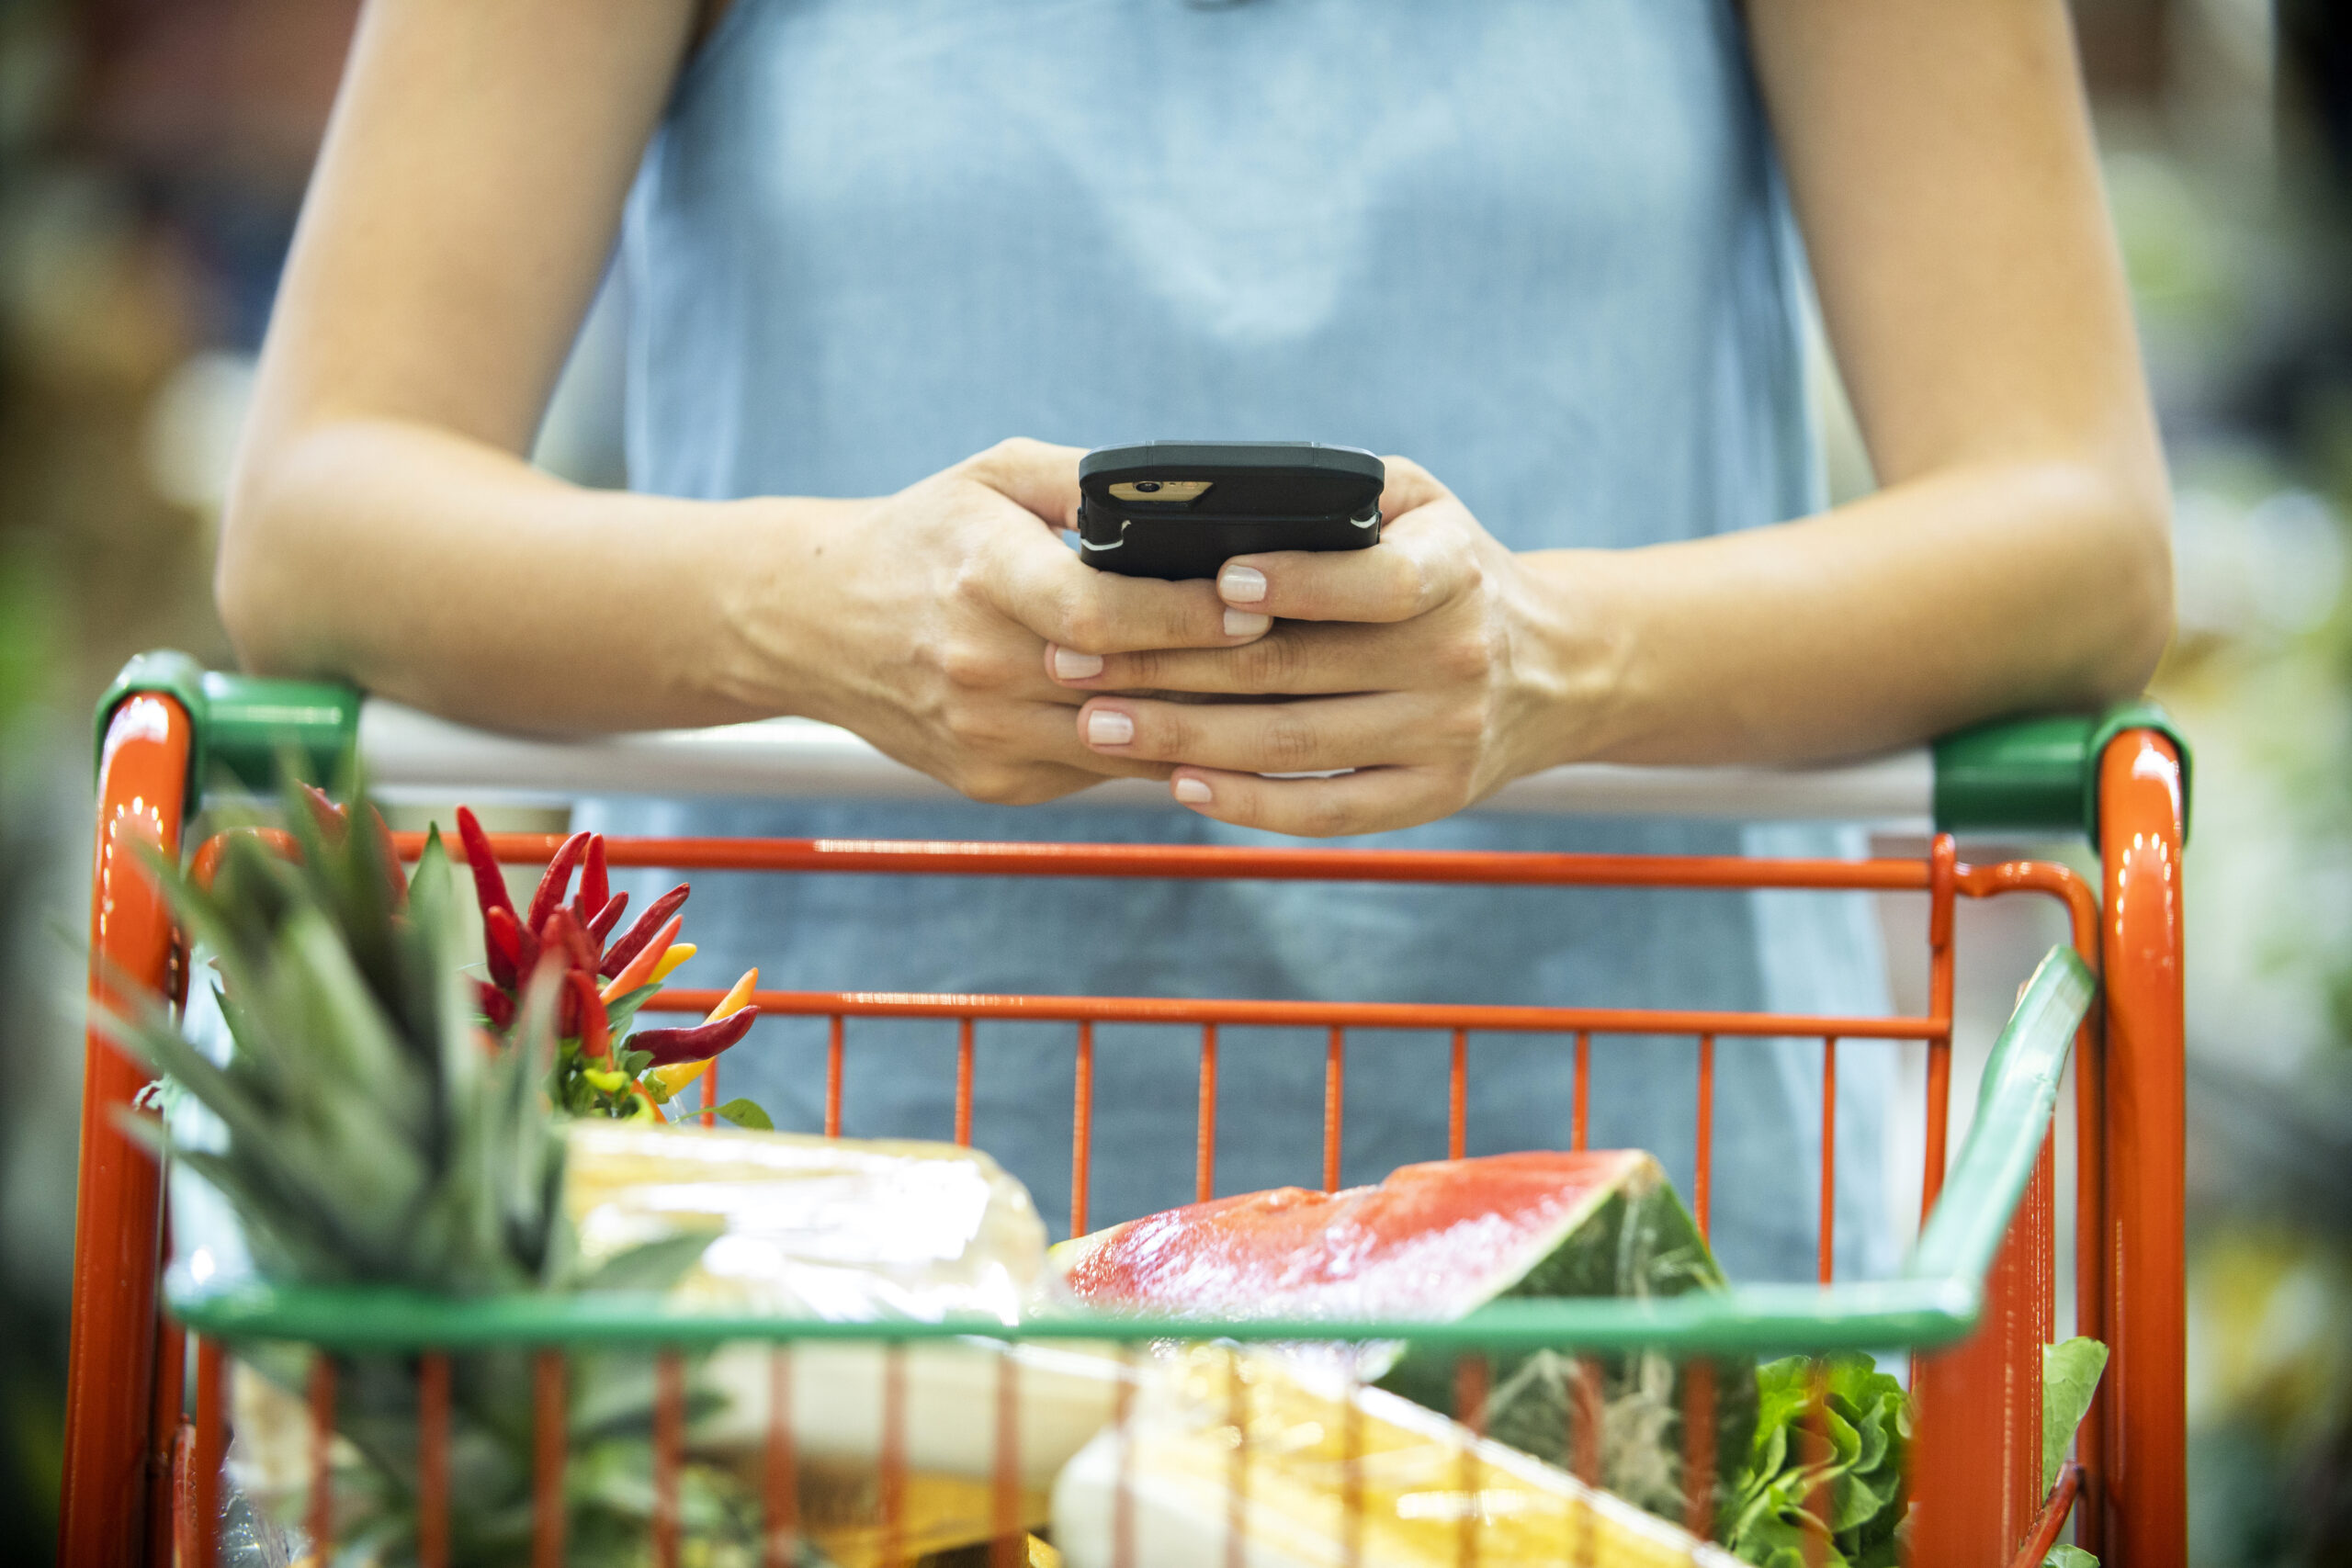 Bringing supermarkets into the smartphone era